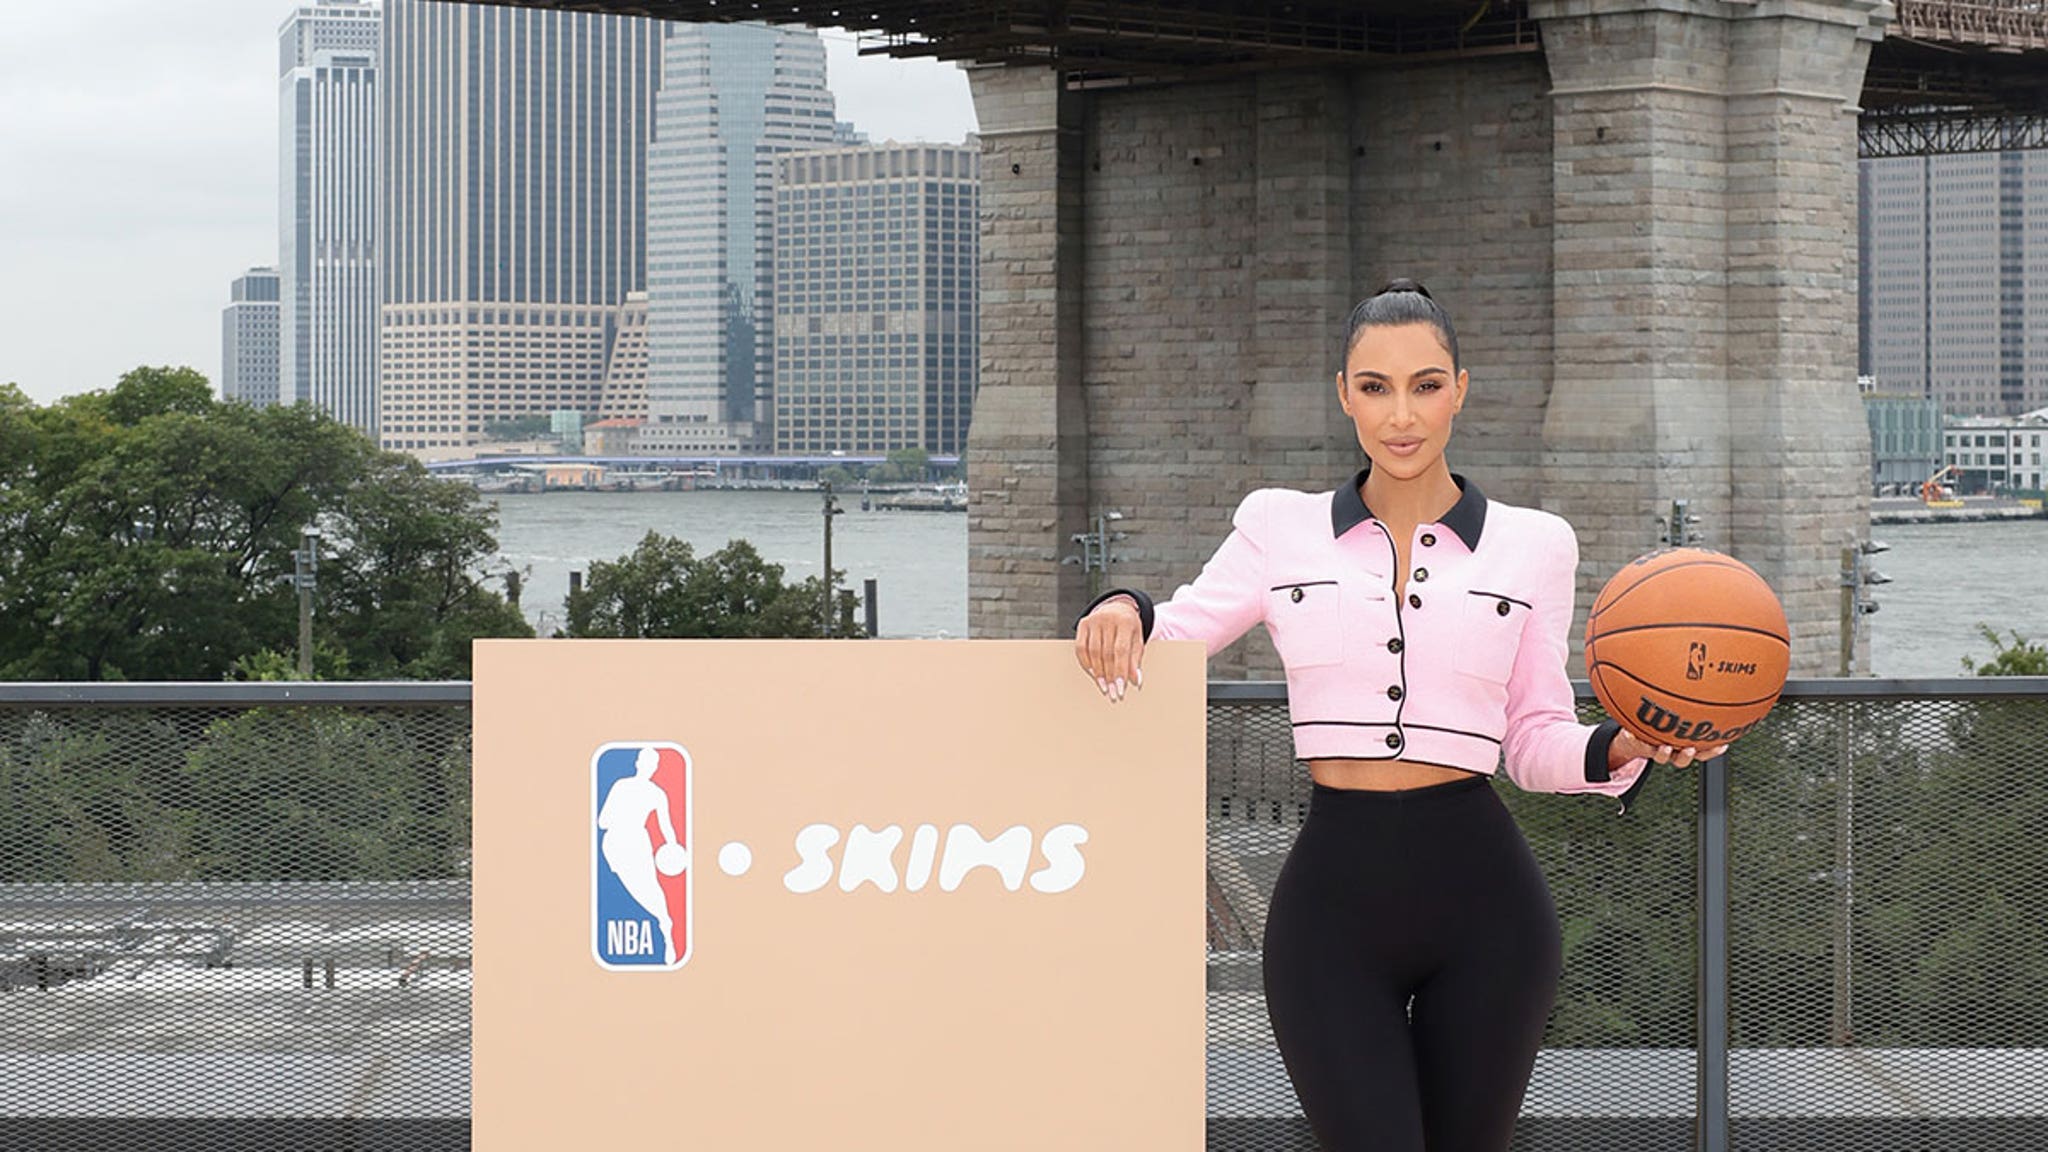 SportsCenter - The NBA and SKIMS announced a multiyear partnership